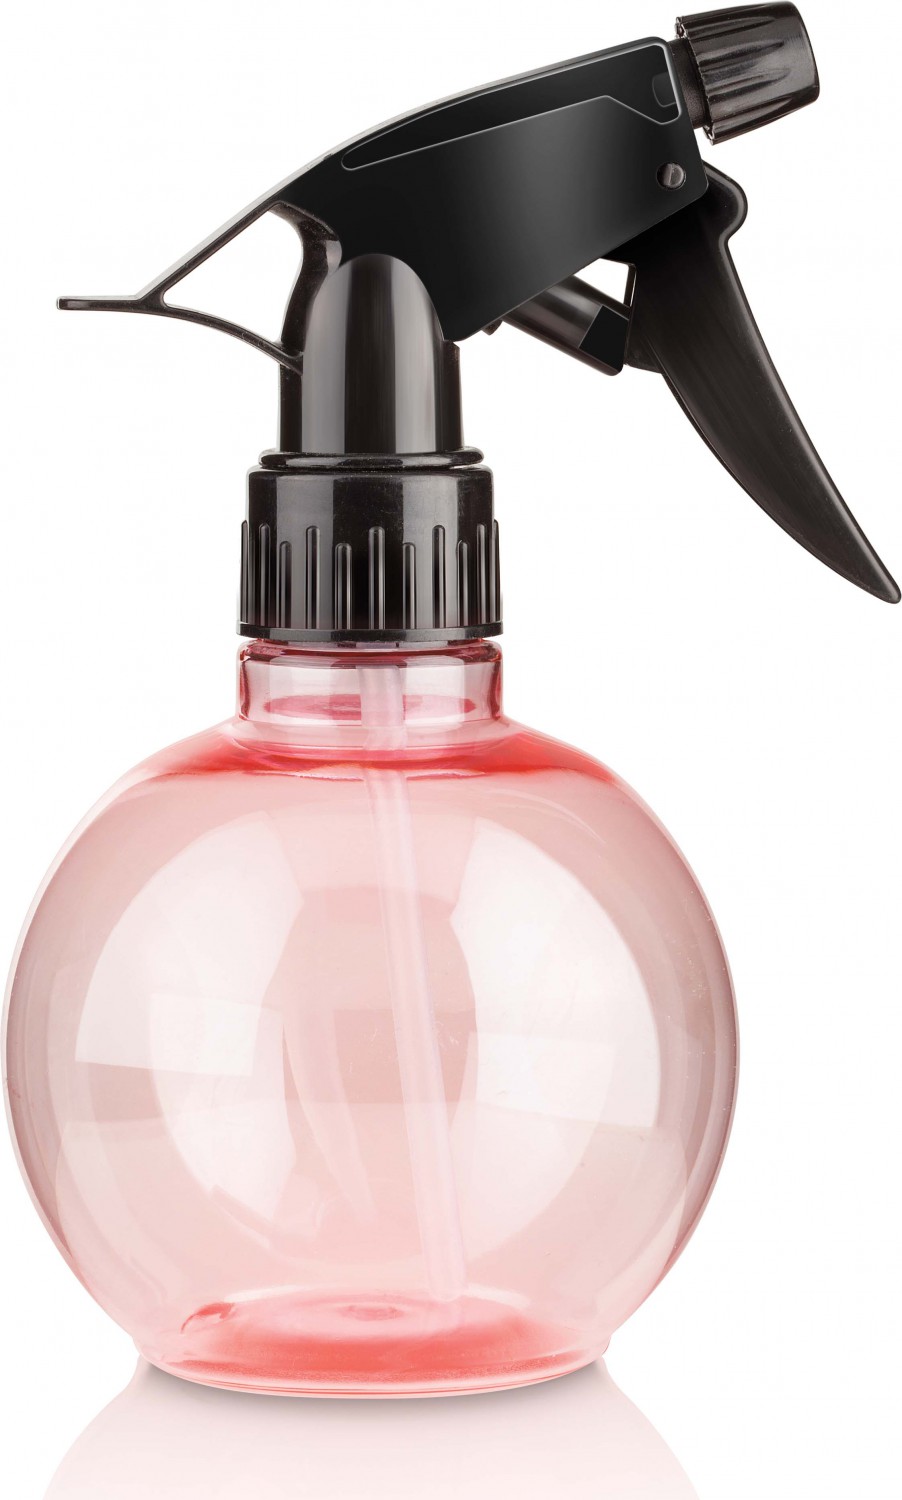  XanitaliaPro Bowl Spray Bottle in Pink 